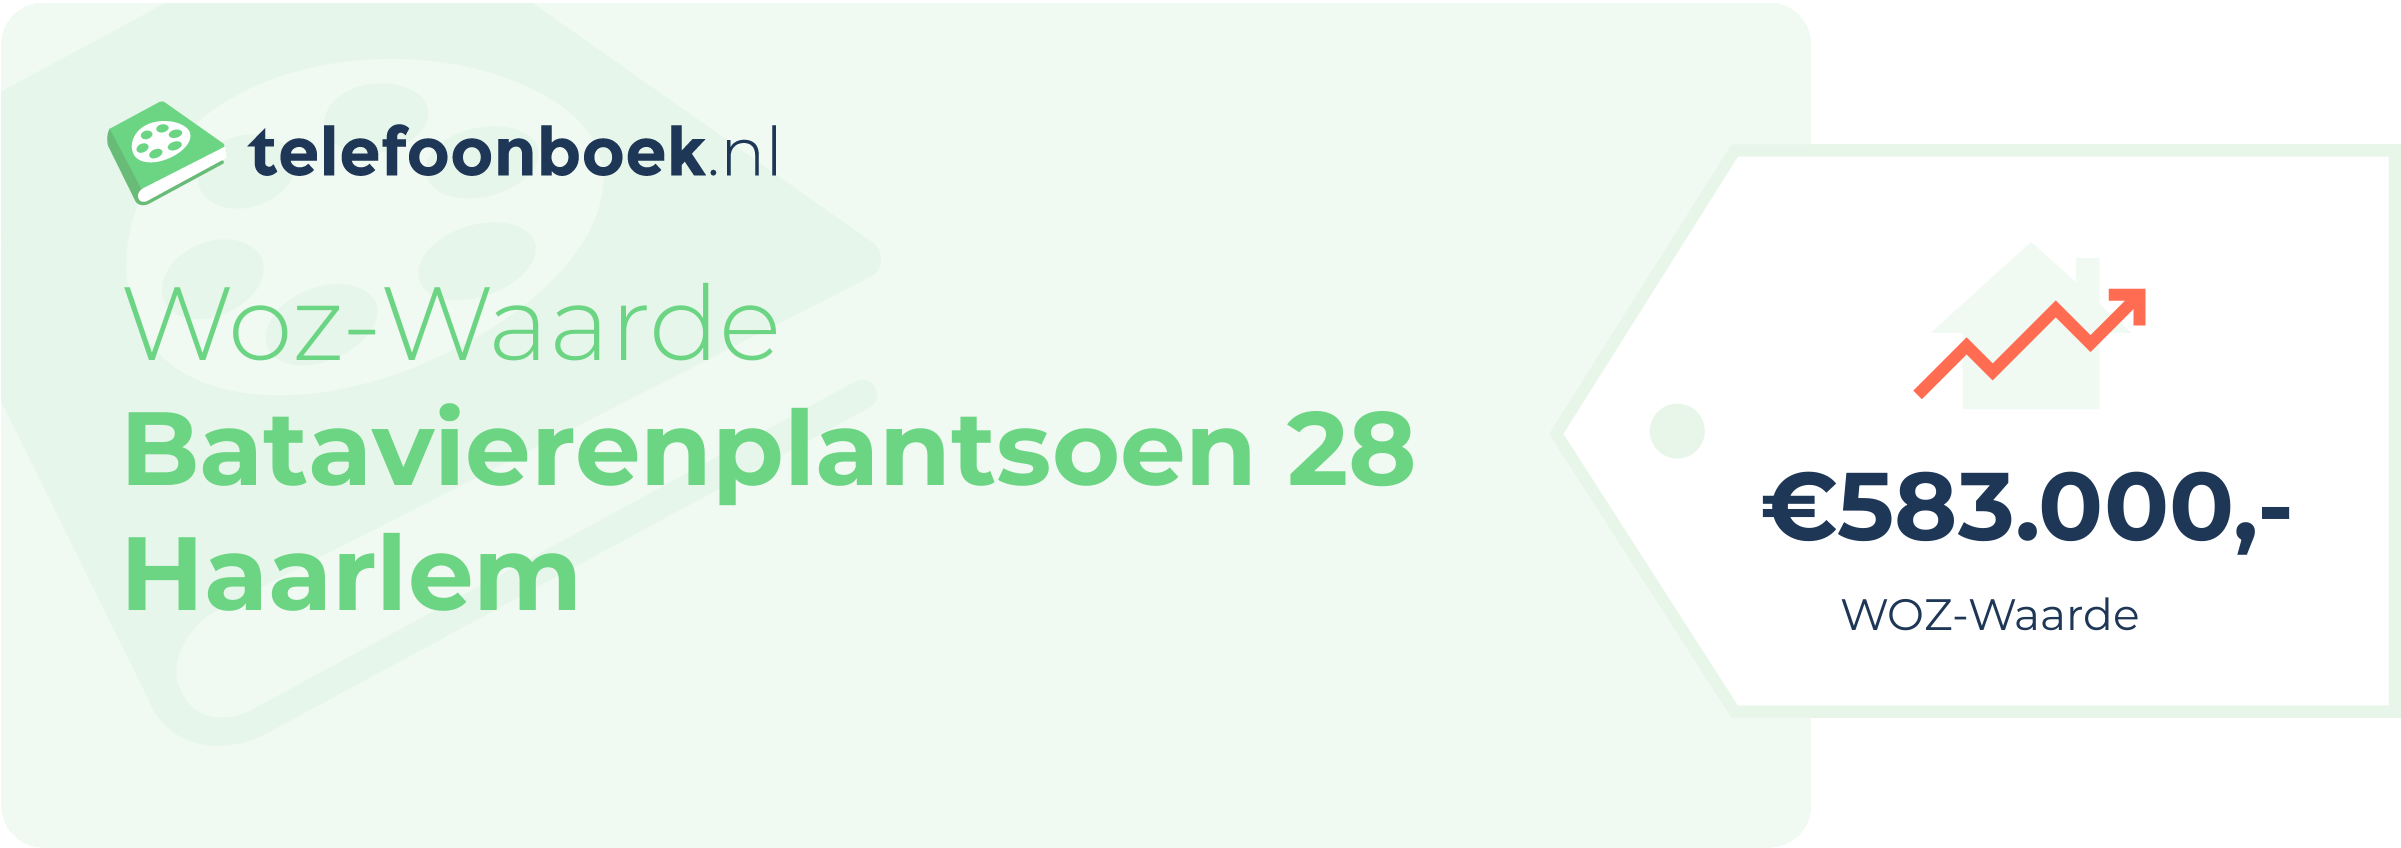 WOZ-waarde Batavierenplantsoen 28 Haarlem